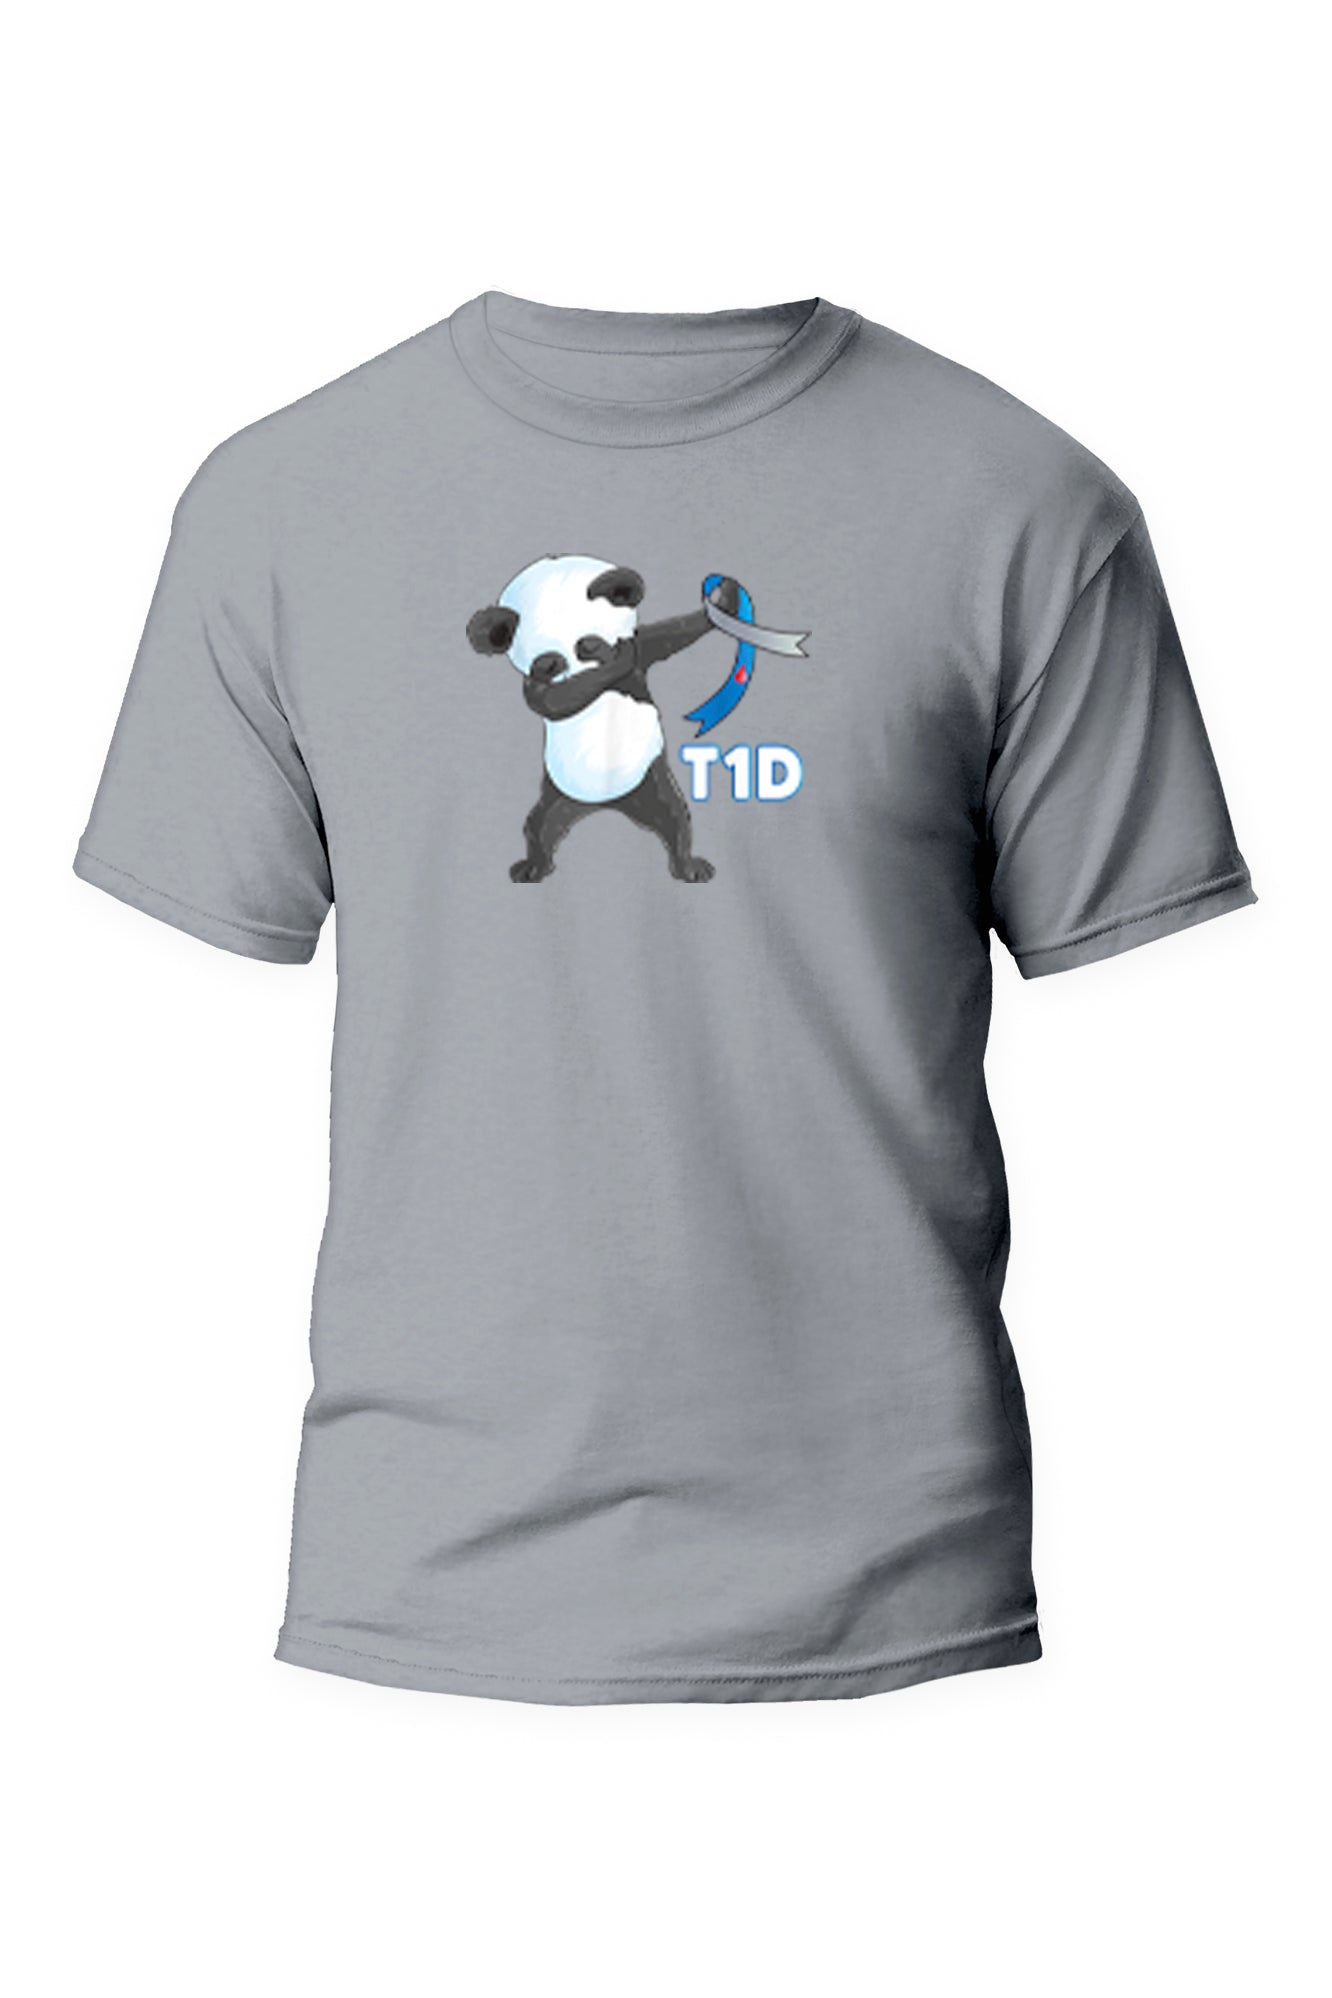 Dabbing Panda - T1D - Diabetes awareness Kids T-shirt